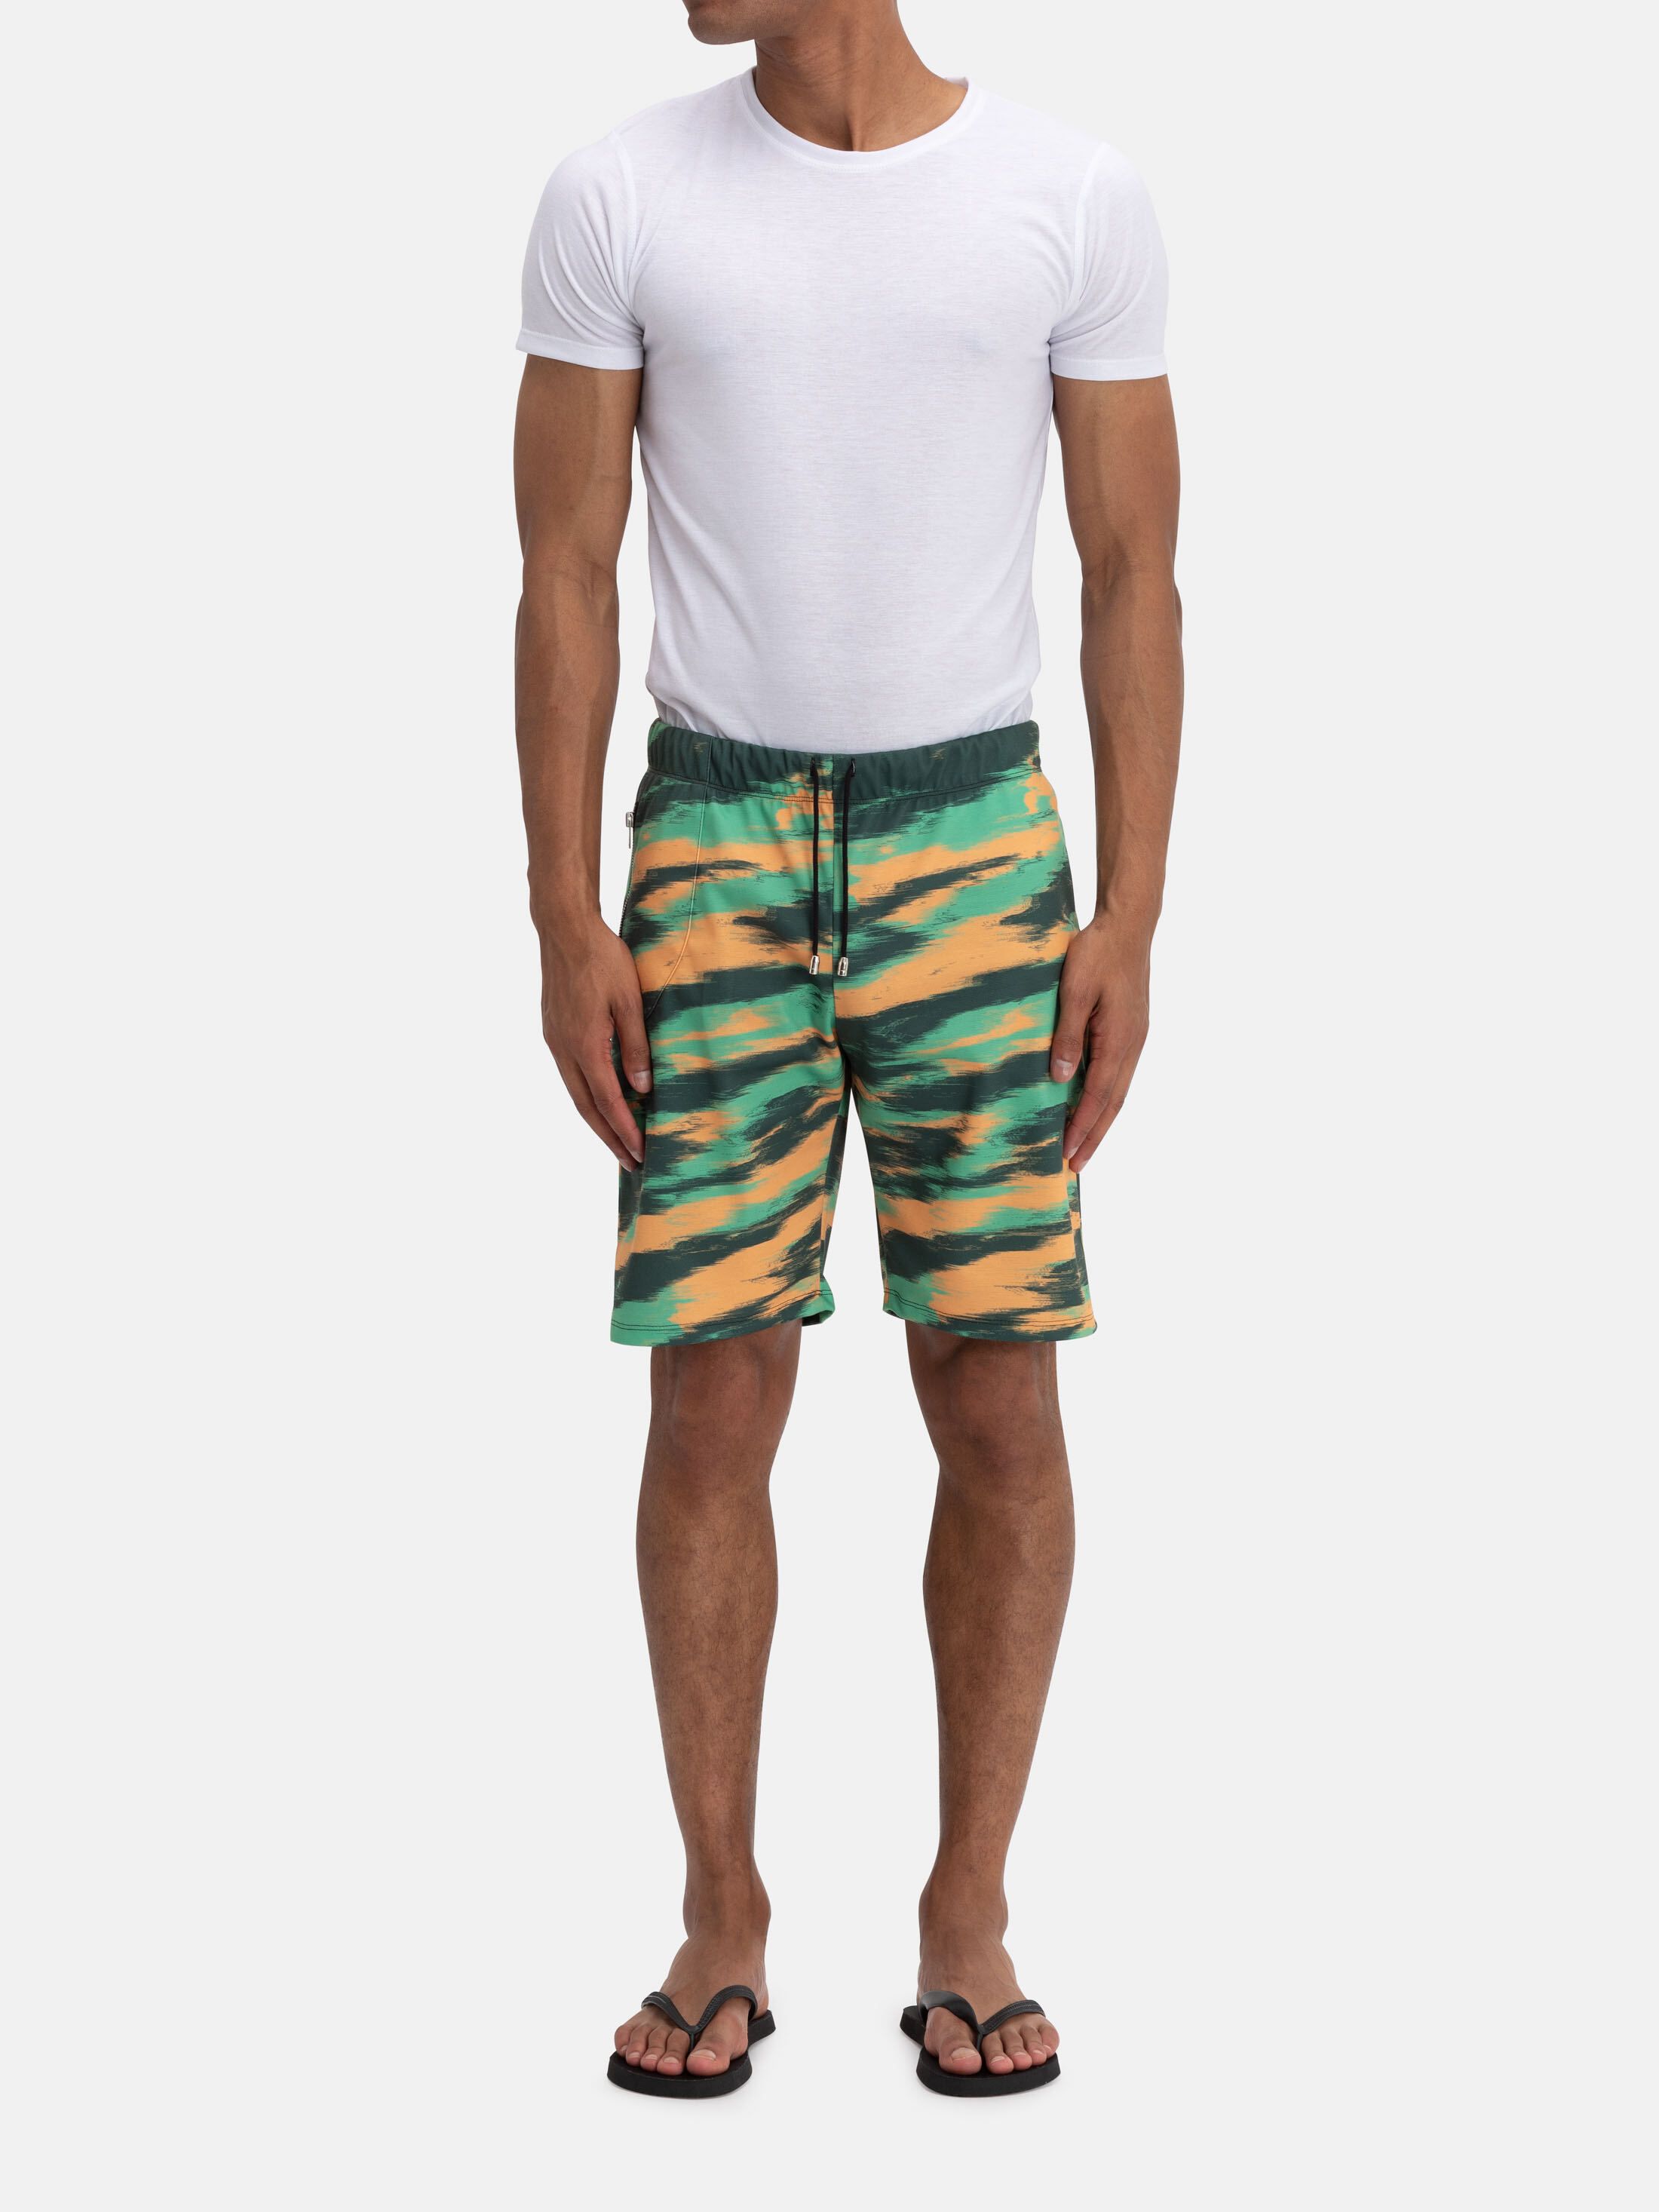 men's custom printed shorts